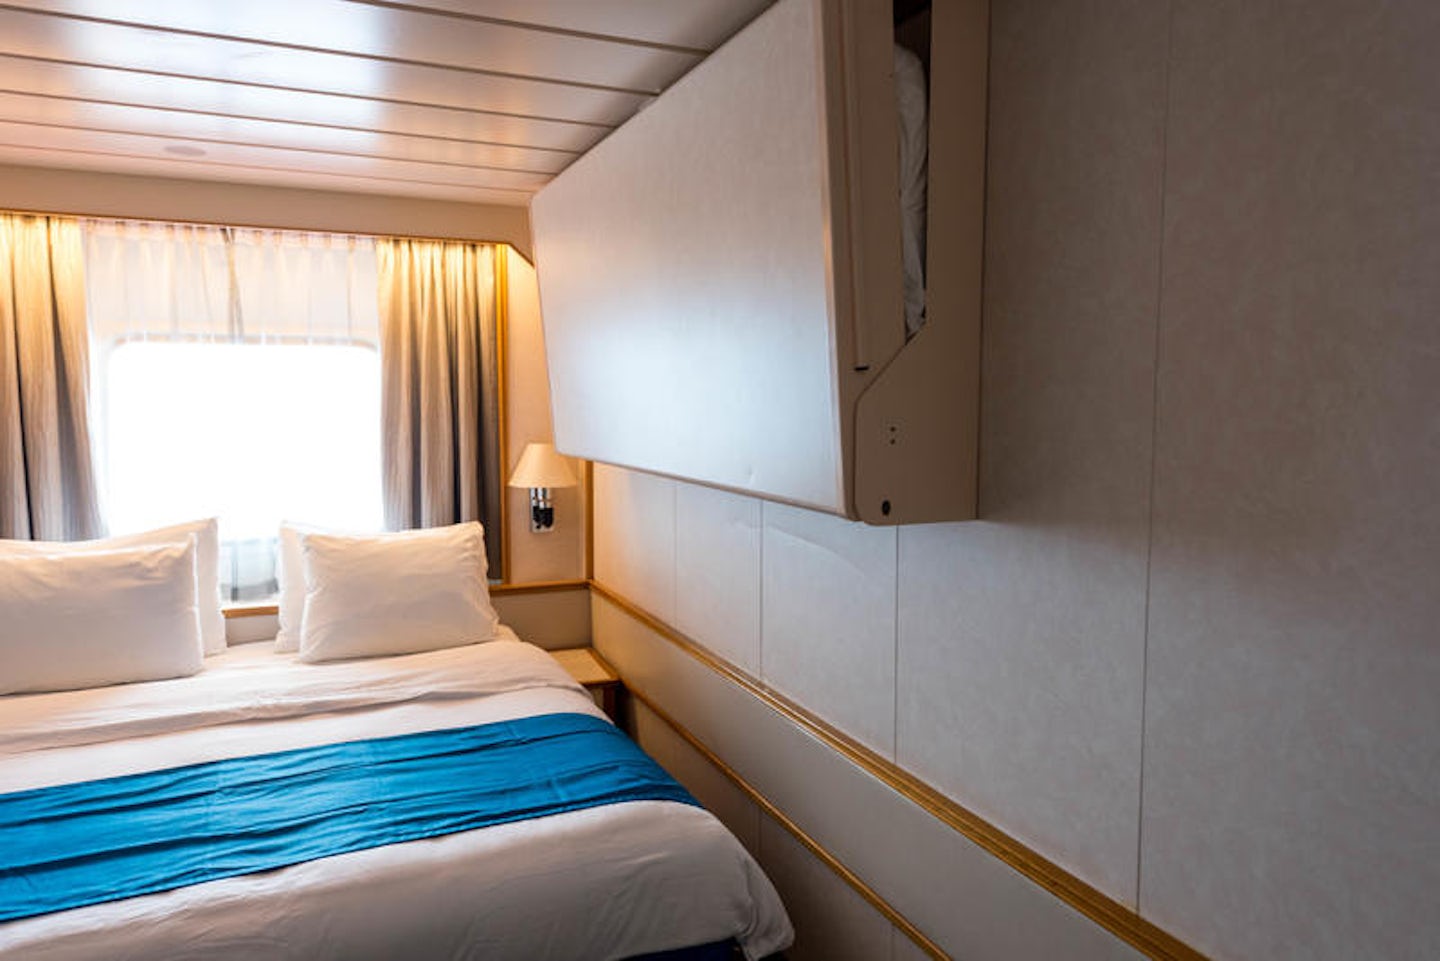 OceanView Cabin on Royal Caribbean Empress of the Seas Cruise Ship Cruise Critic